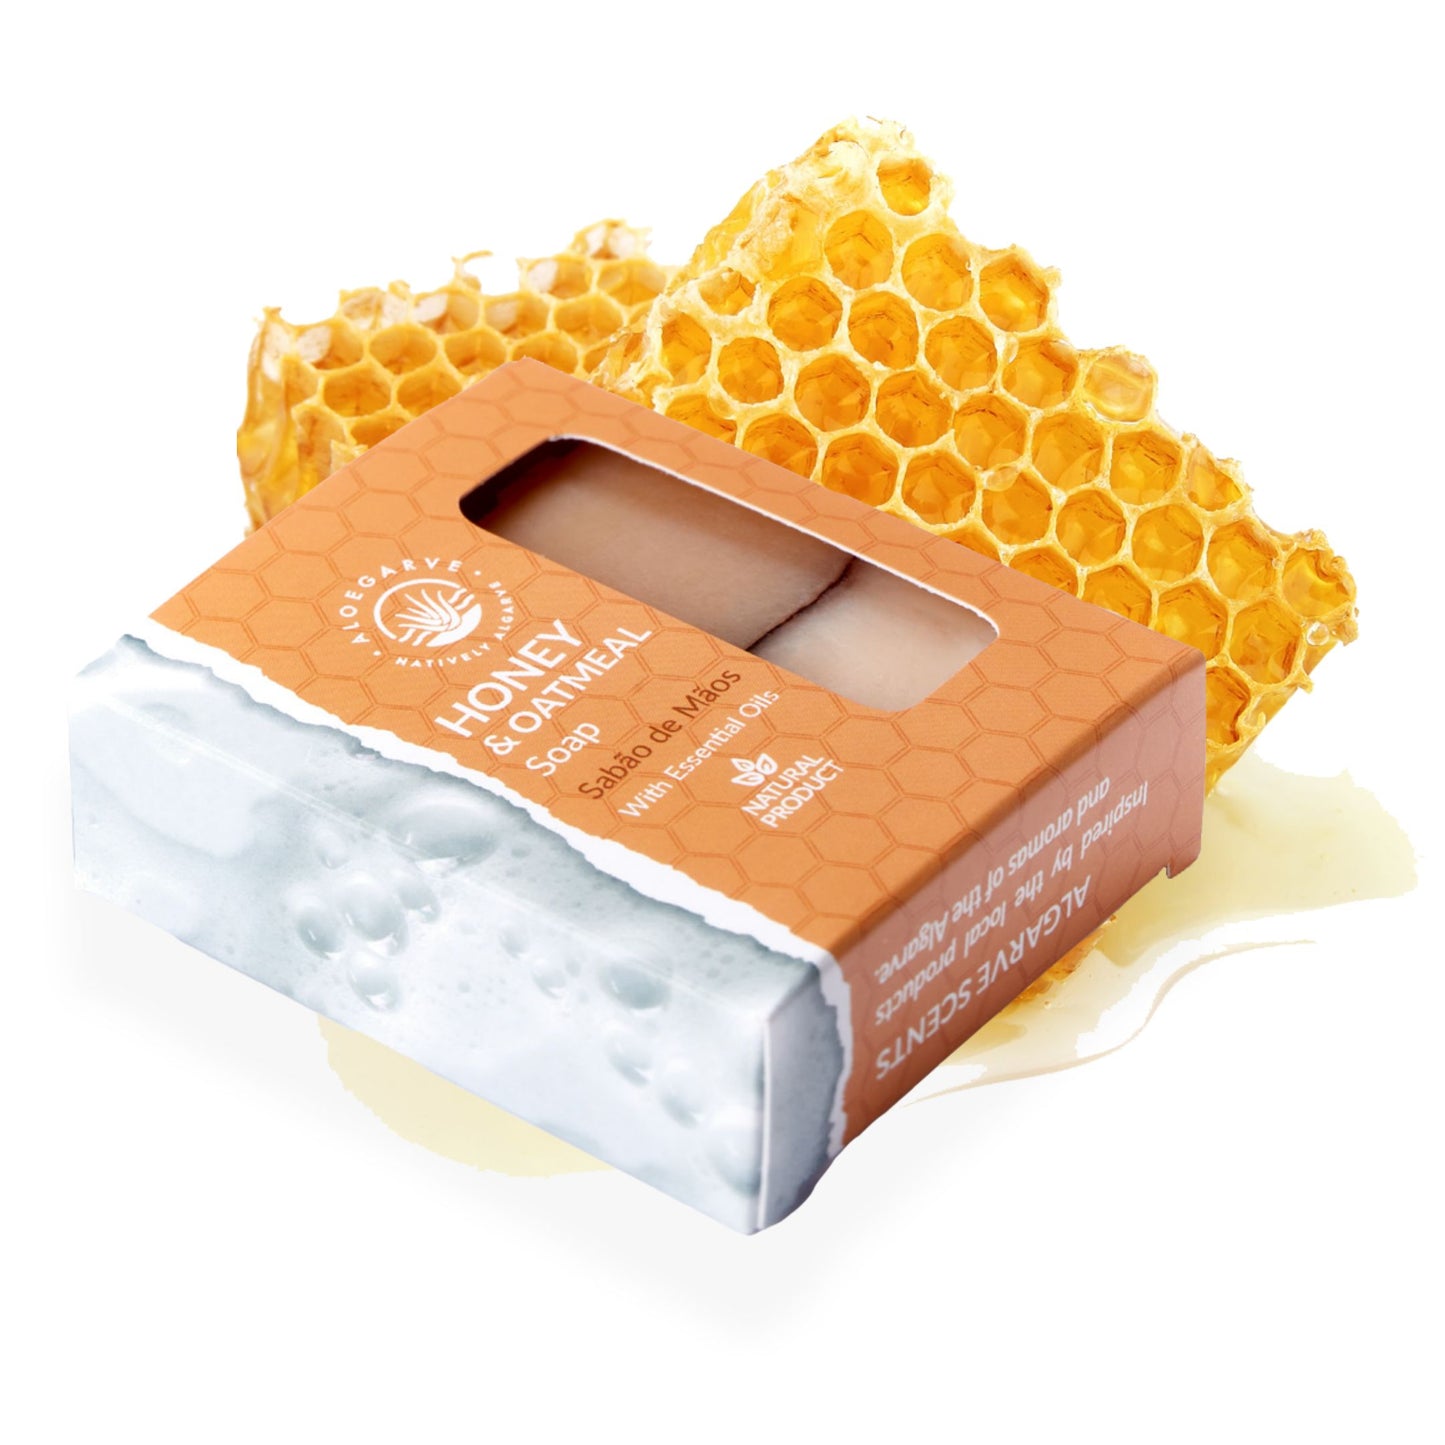 "Honey I love you" - Honey Oatmeal Soap Bar 100g